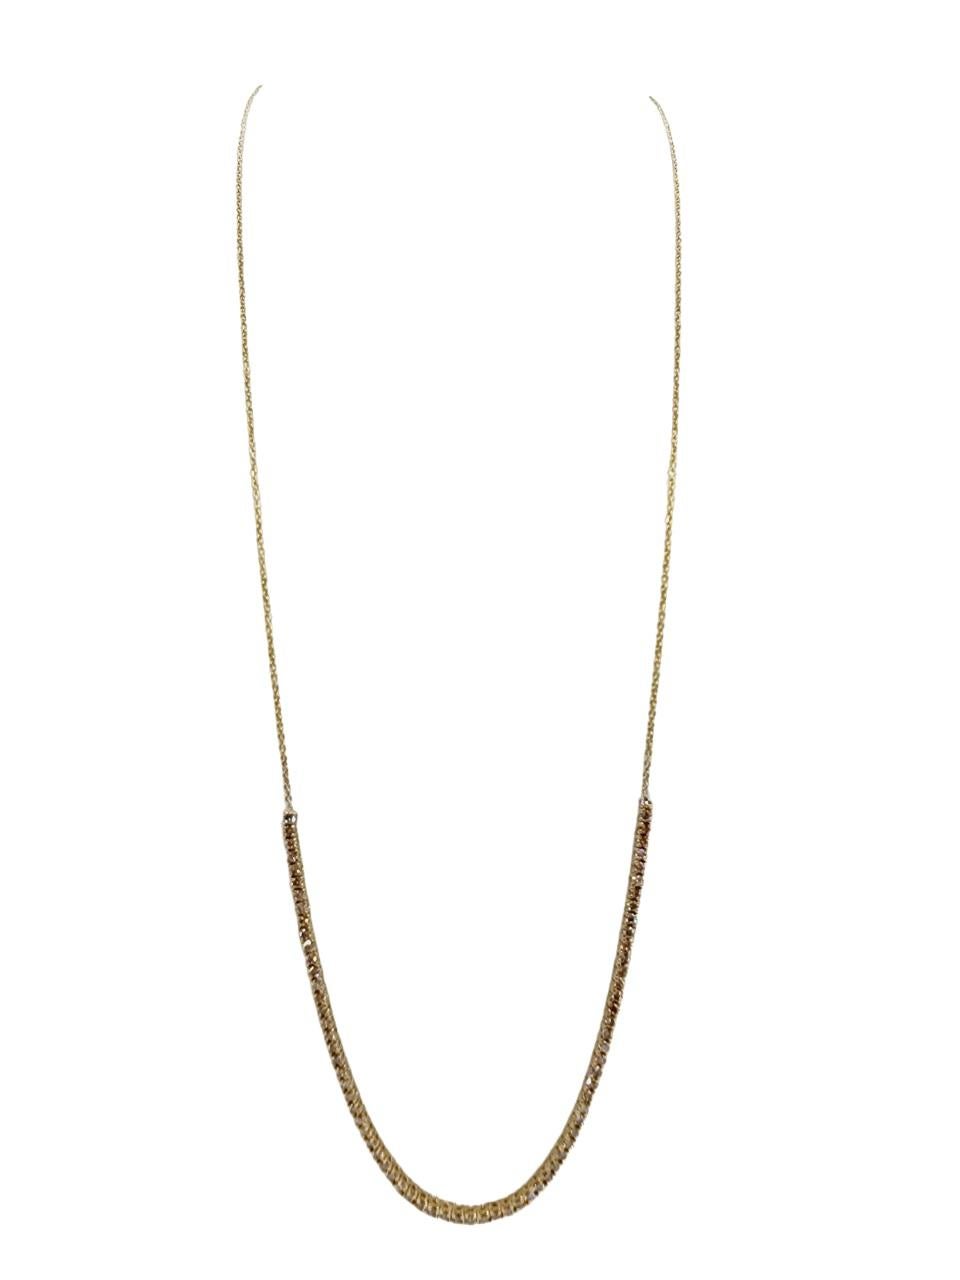 thin gold chain with diamond pendant